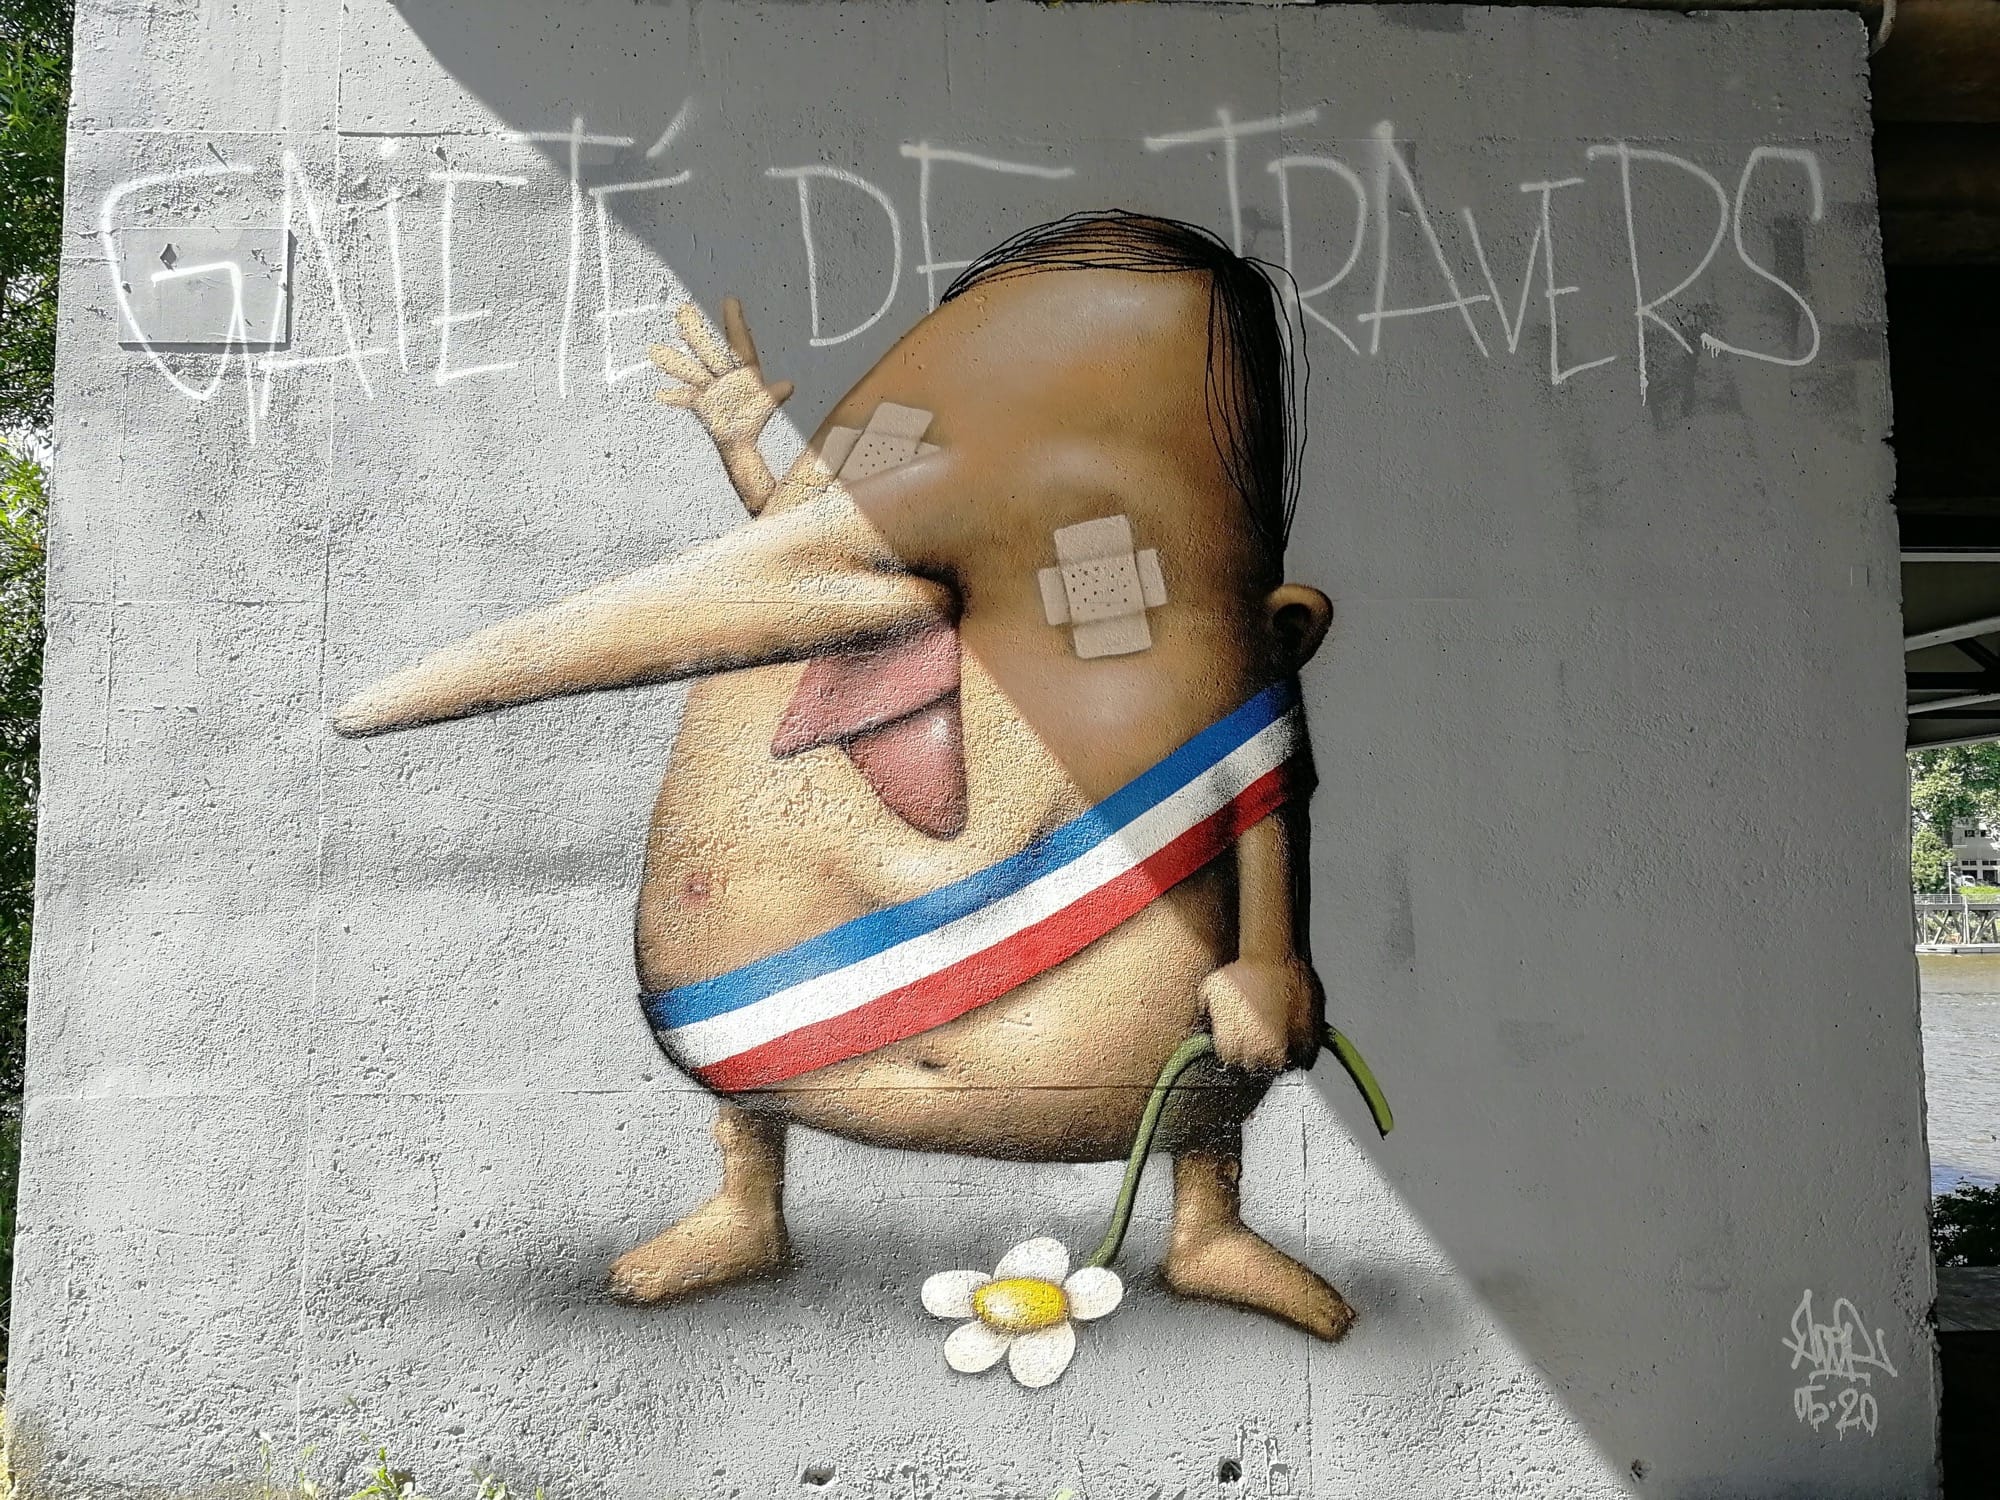 Graffiti 4152 Gaité de travers de Ador à Nantes France